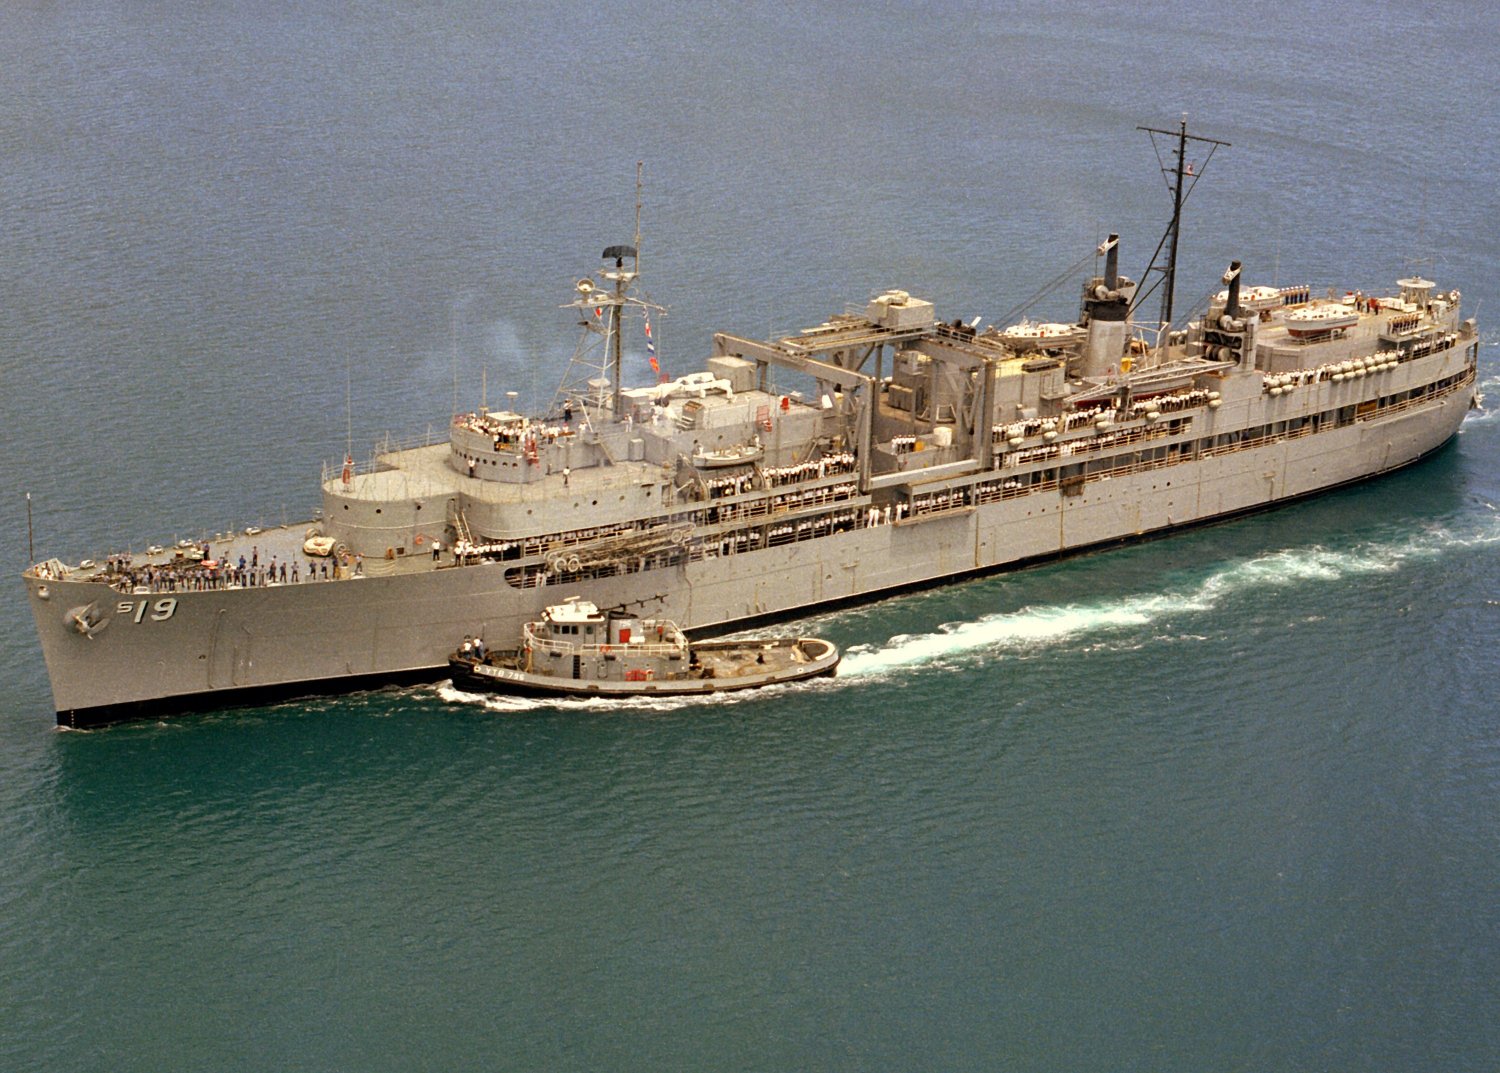 Tugboat Saco guiding USS Proteus into Naval Base Guam, 24 May 1980